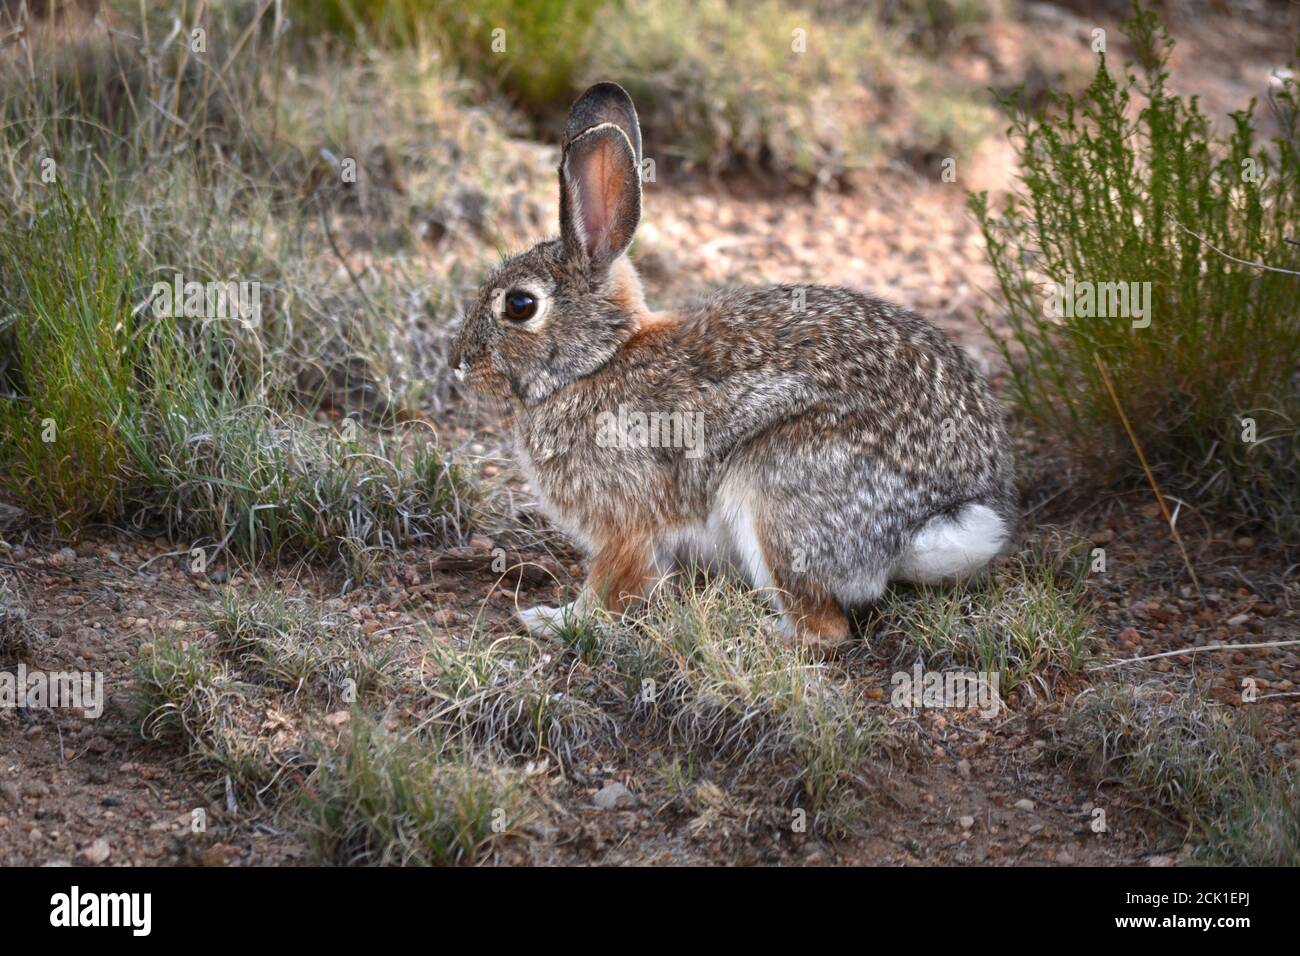 A desert cottontail rabbit (Sylvilagus audubonii) in the American Southwest. Stock Photo